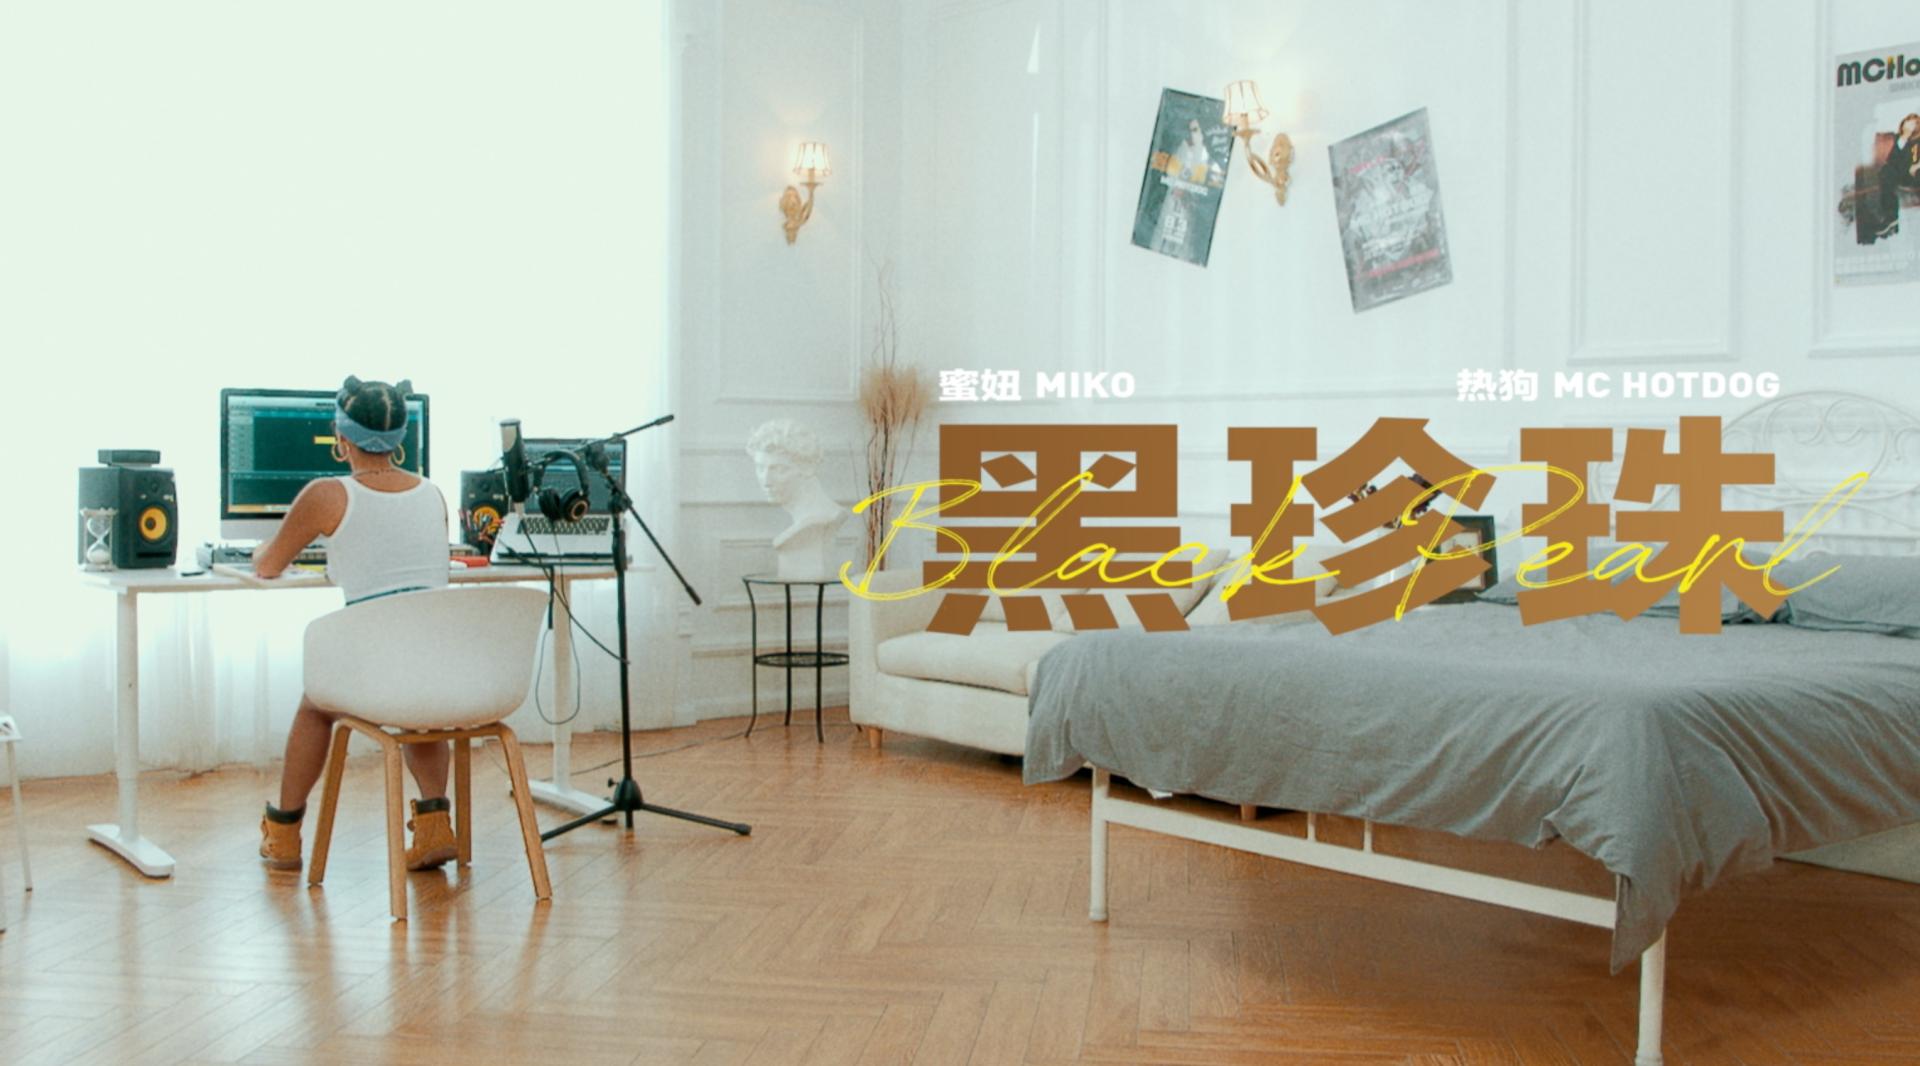 蜜妞Miko Feat. 热狗McHotdog - 黑珍珠 Black pearl 官方MV